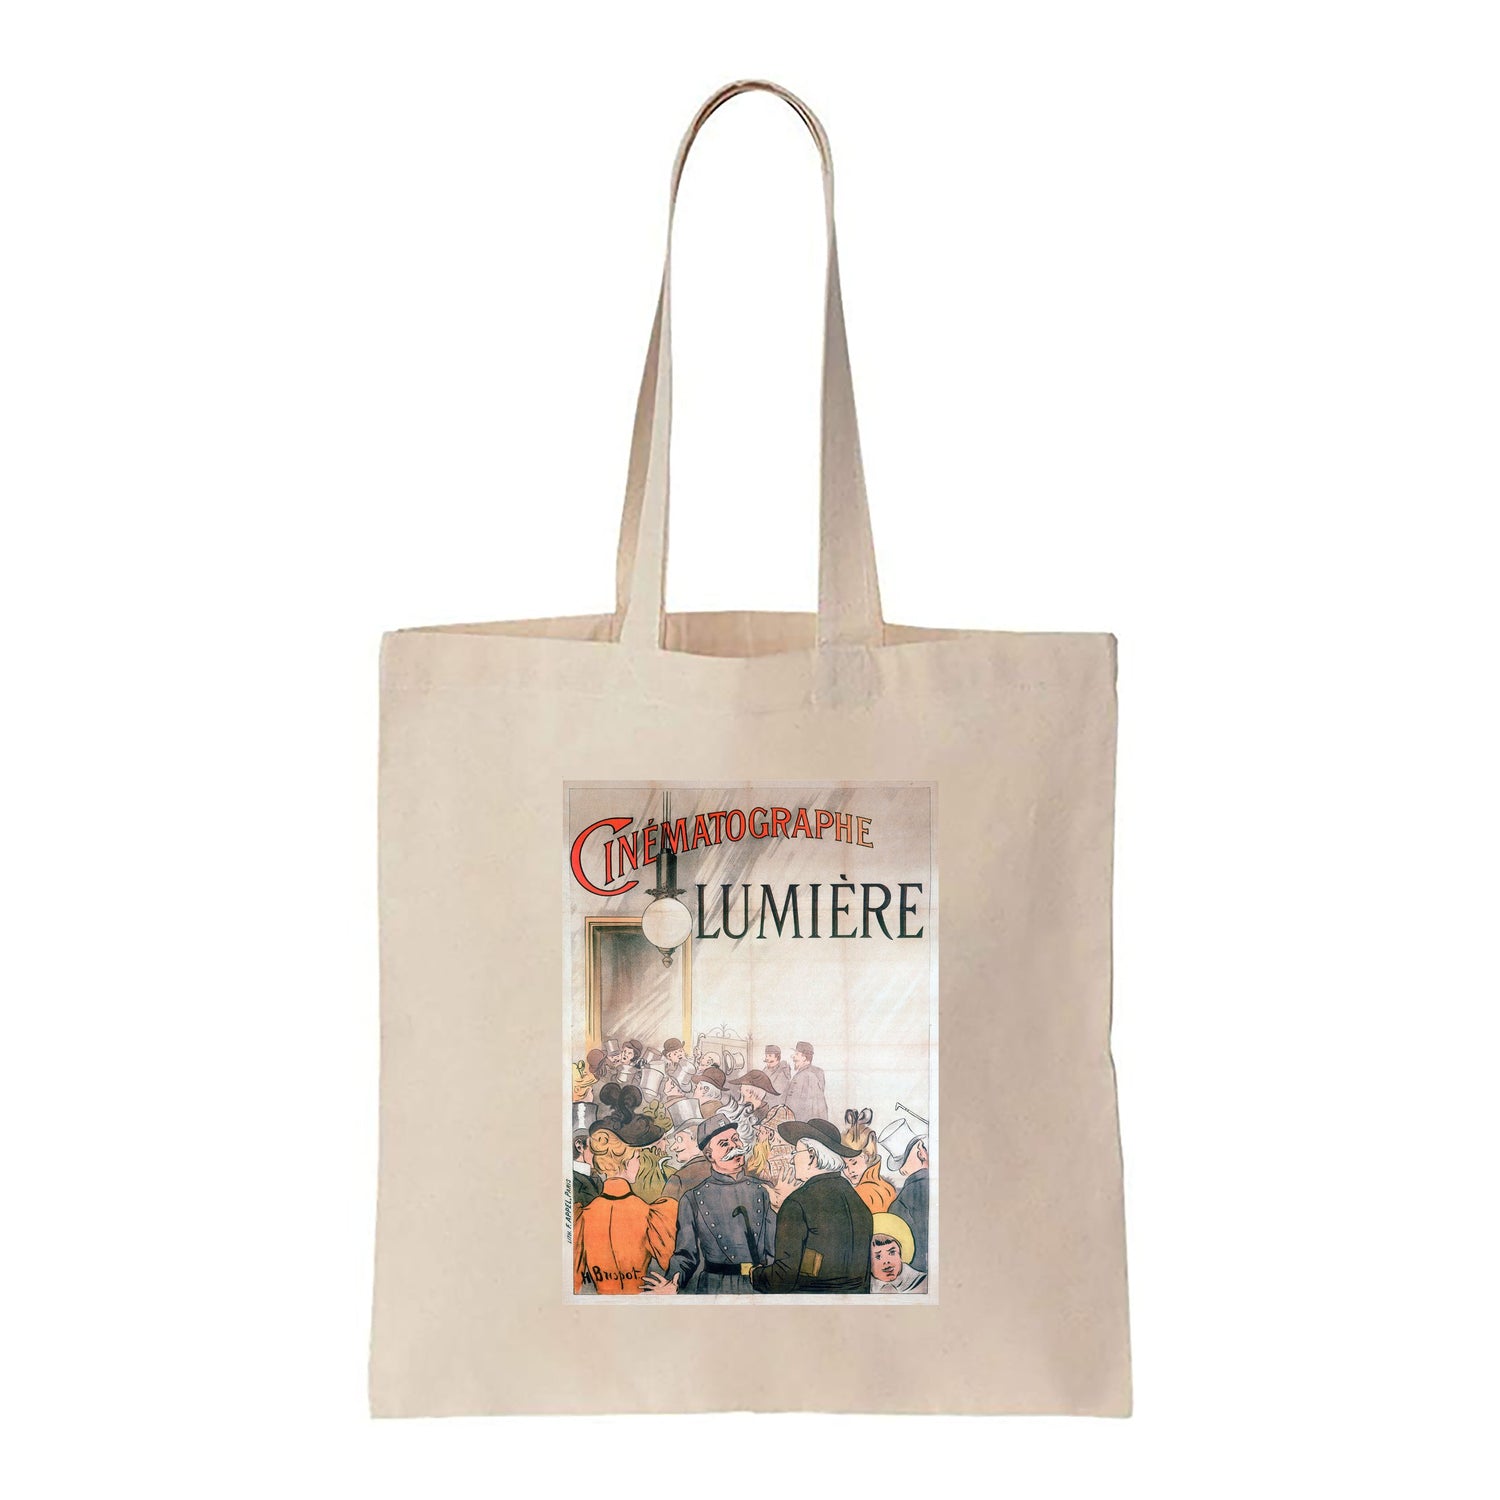 Cinematographie Lumiere - Canvas Tote Bag